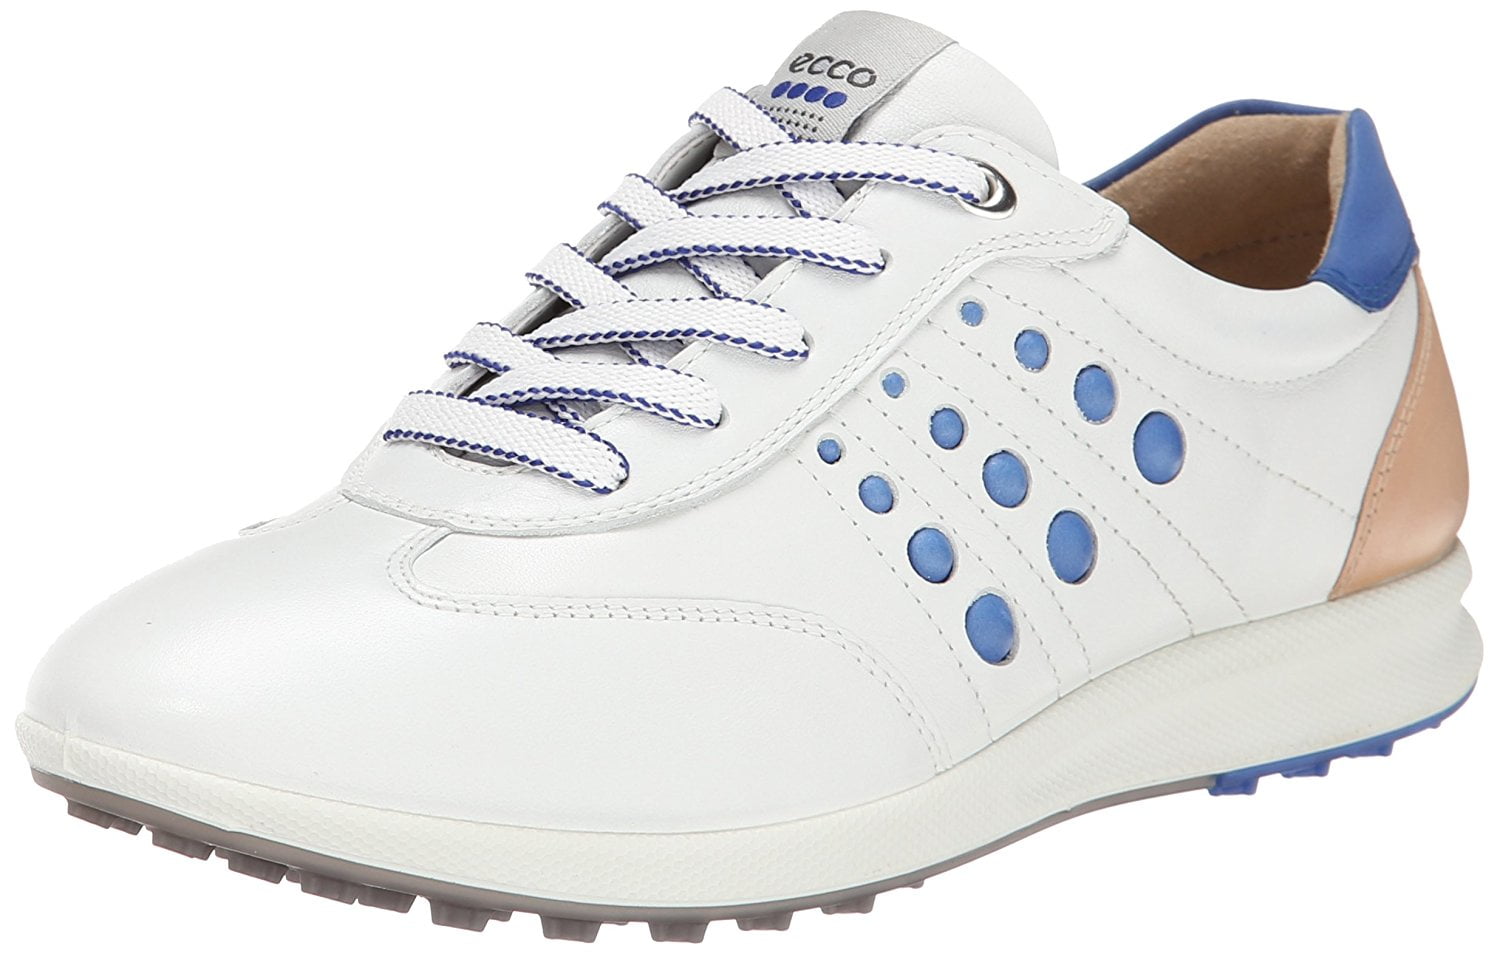 Women's Street Evo Shoes White/Blue Size 38.0 EU / 7-7.5M US - Walmart.com